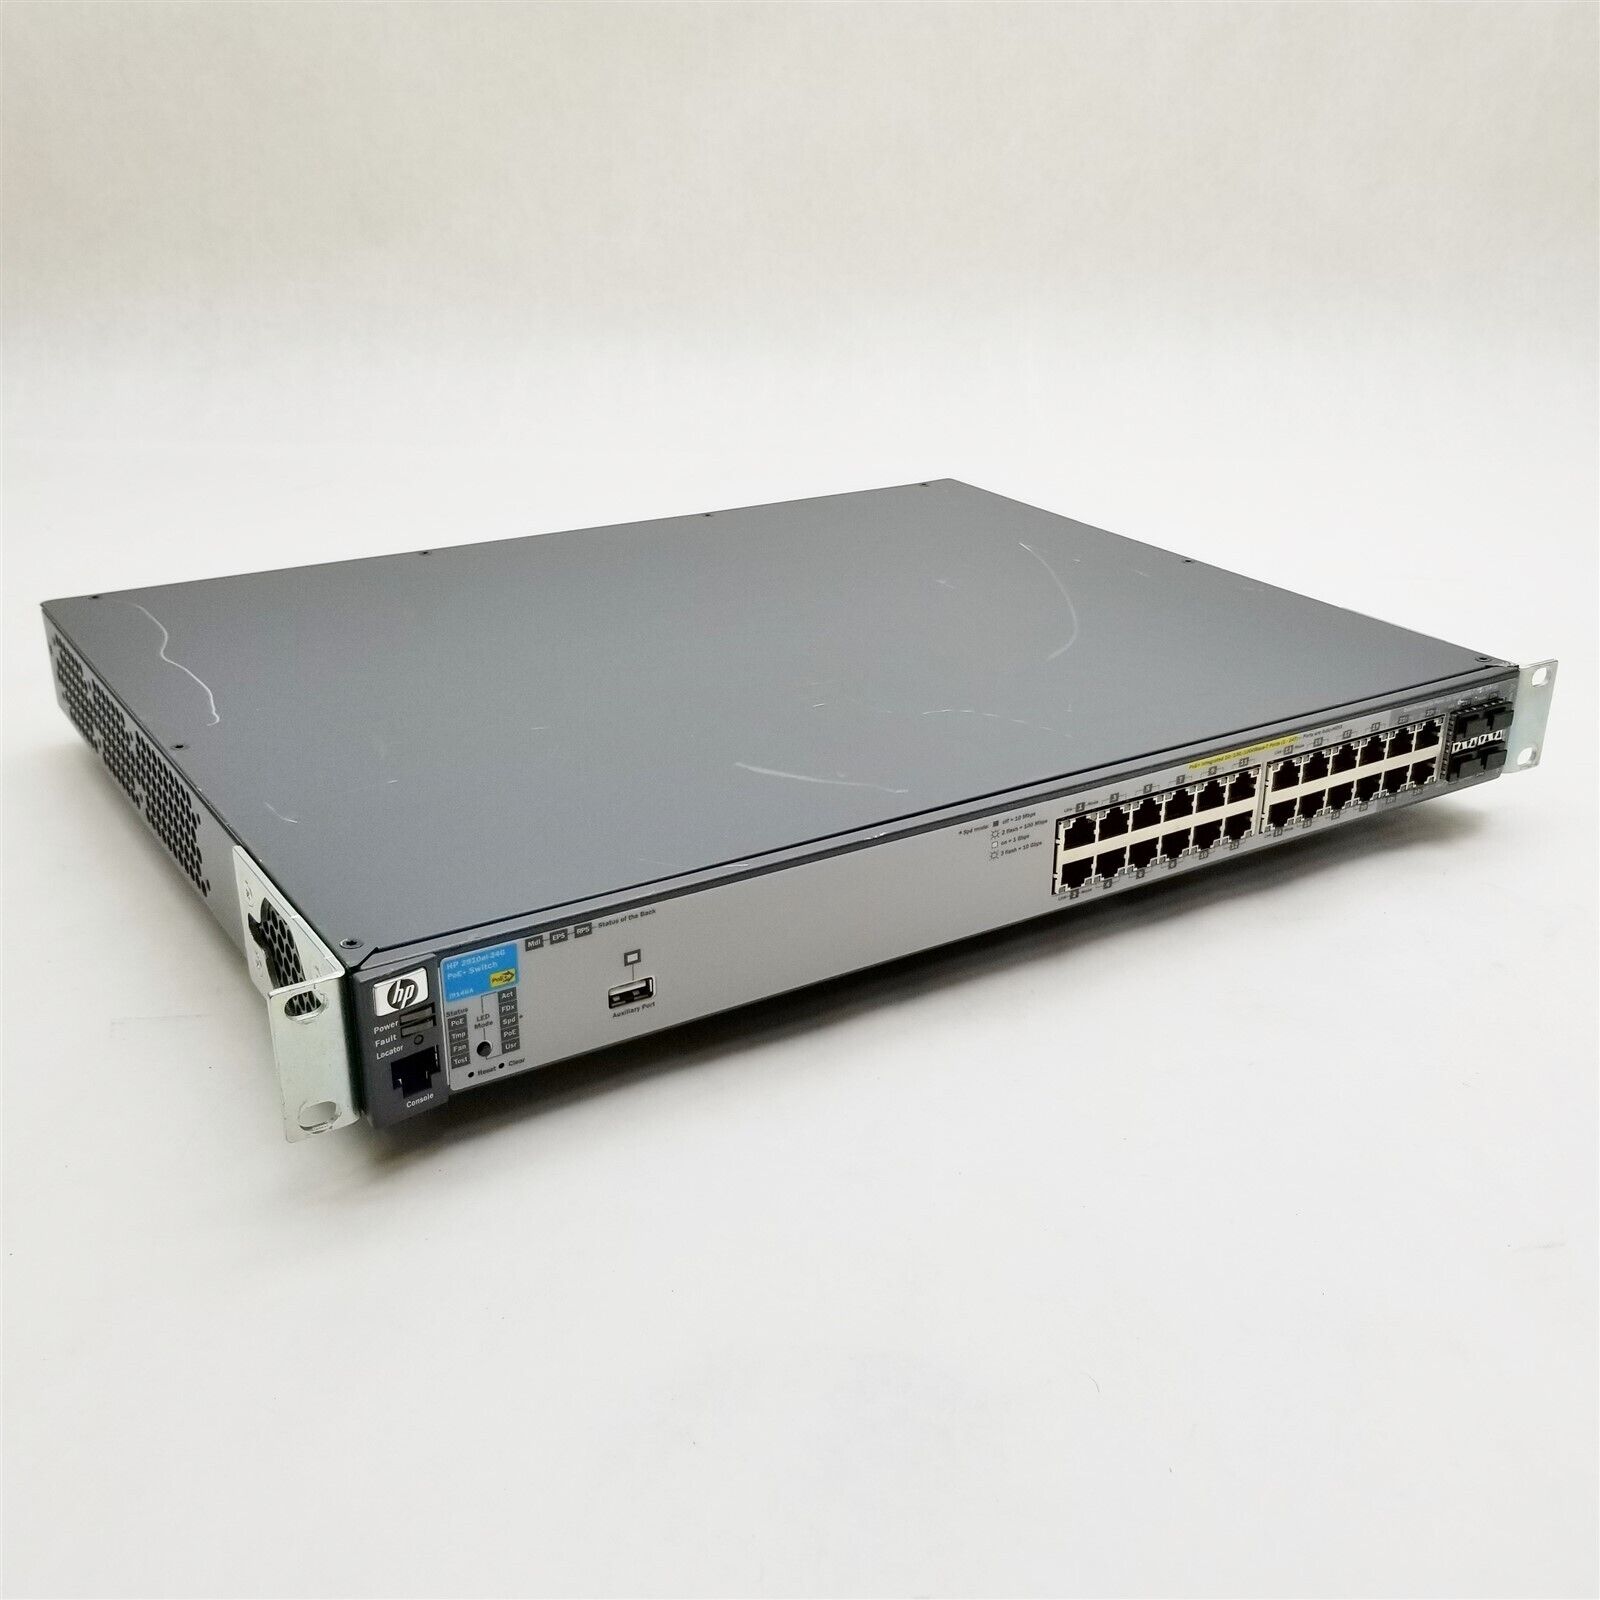 HP ProCurve 2910al-24G PoE+ J9146A 24-Port PoE+ Gigabit Managed Network Switch